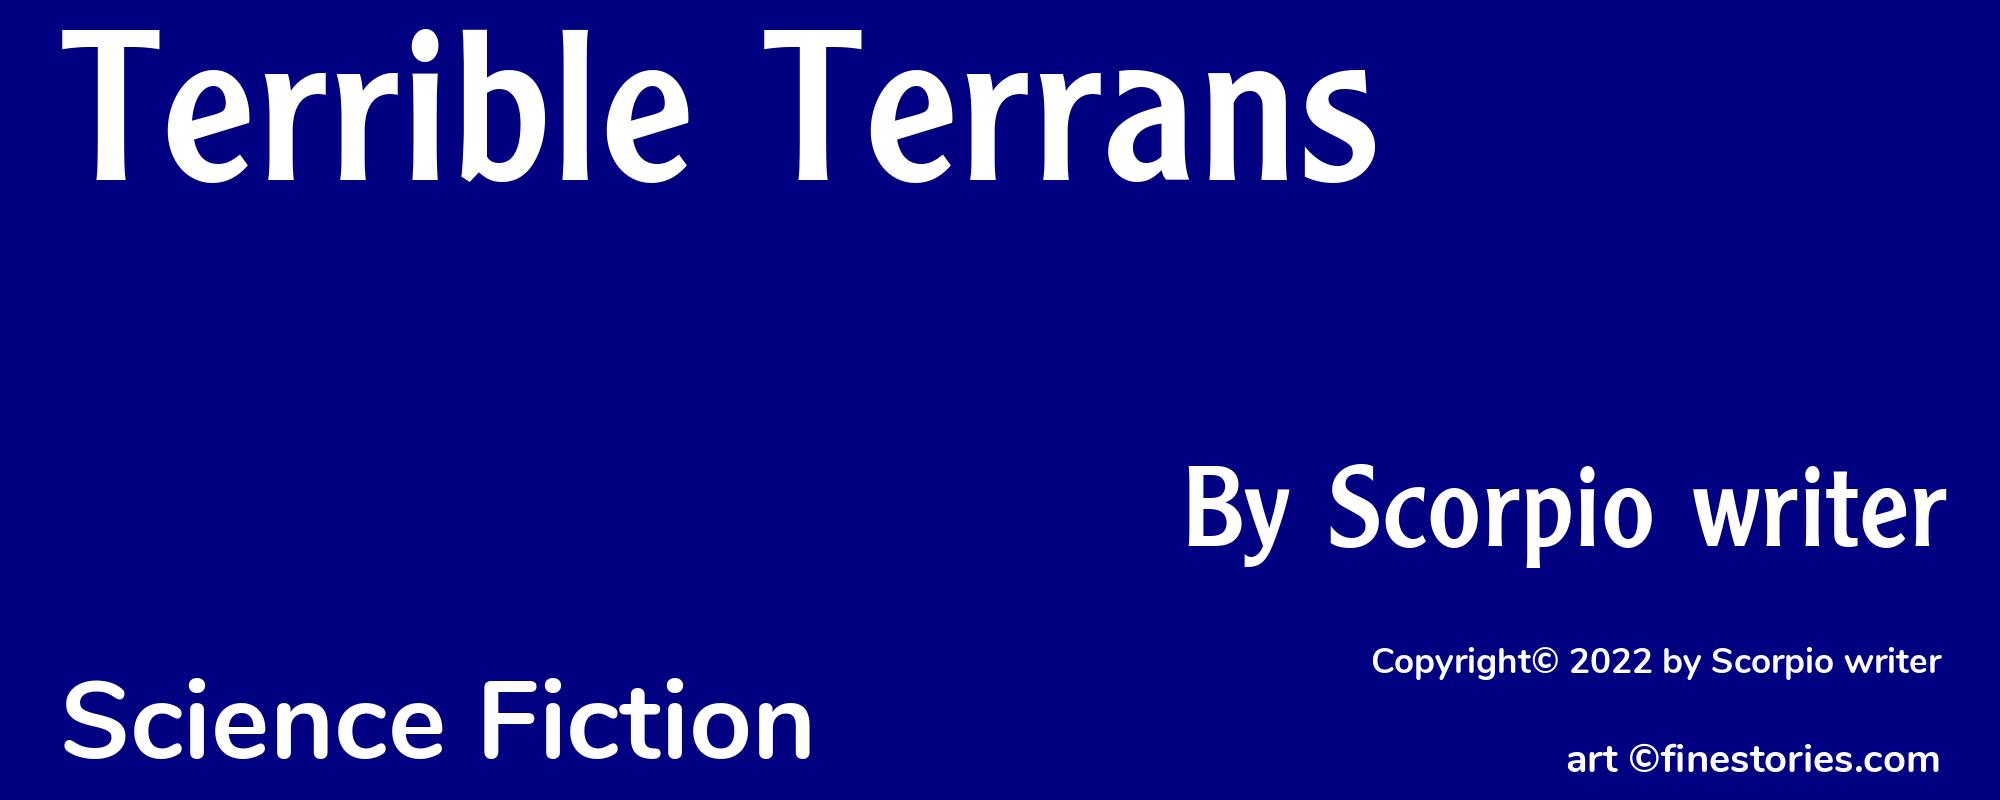 Terrible Terrans - Cover